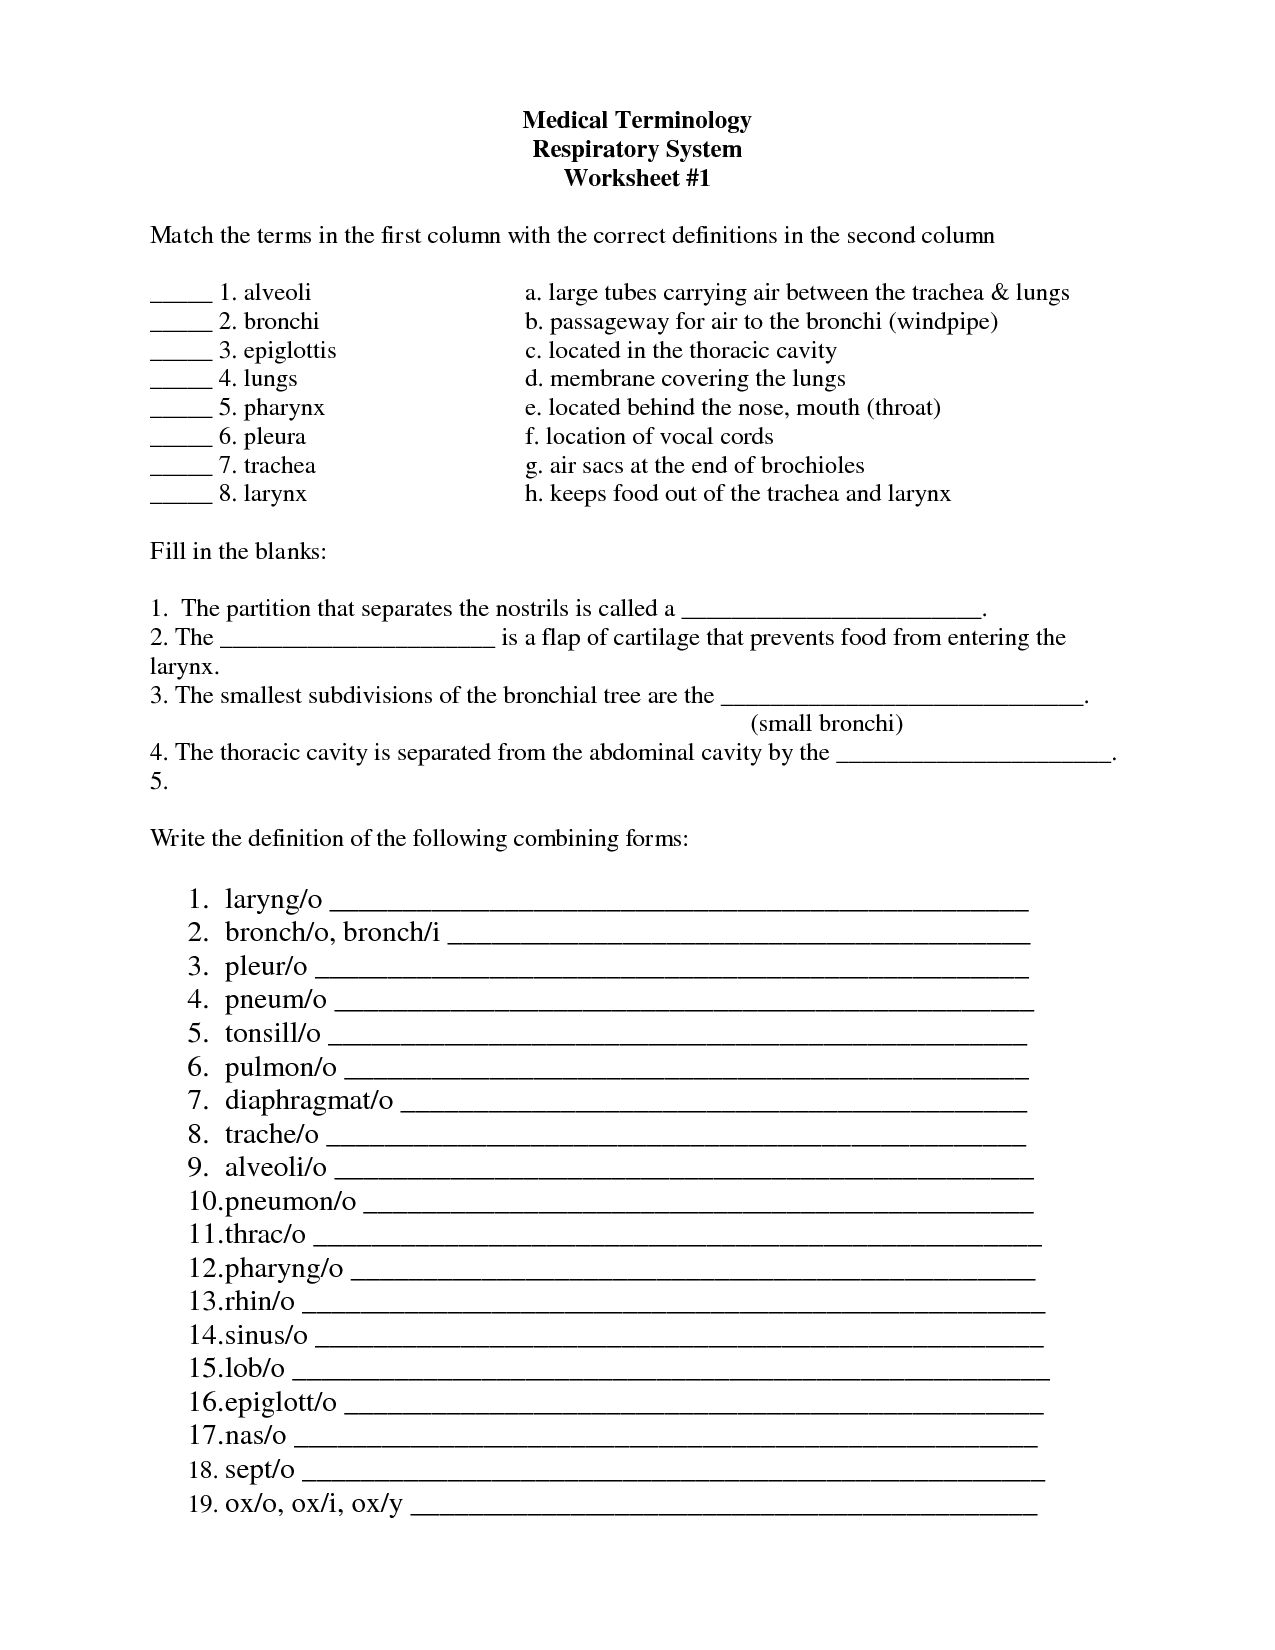 Medical Terminology Suffixes Worksheet  Briefencounters Within Medical Terminology Suffixes Worksheet